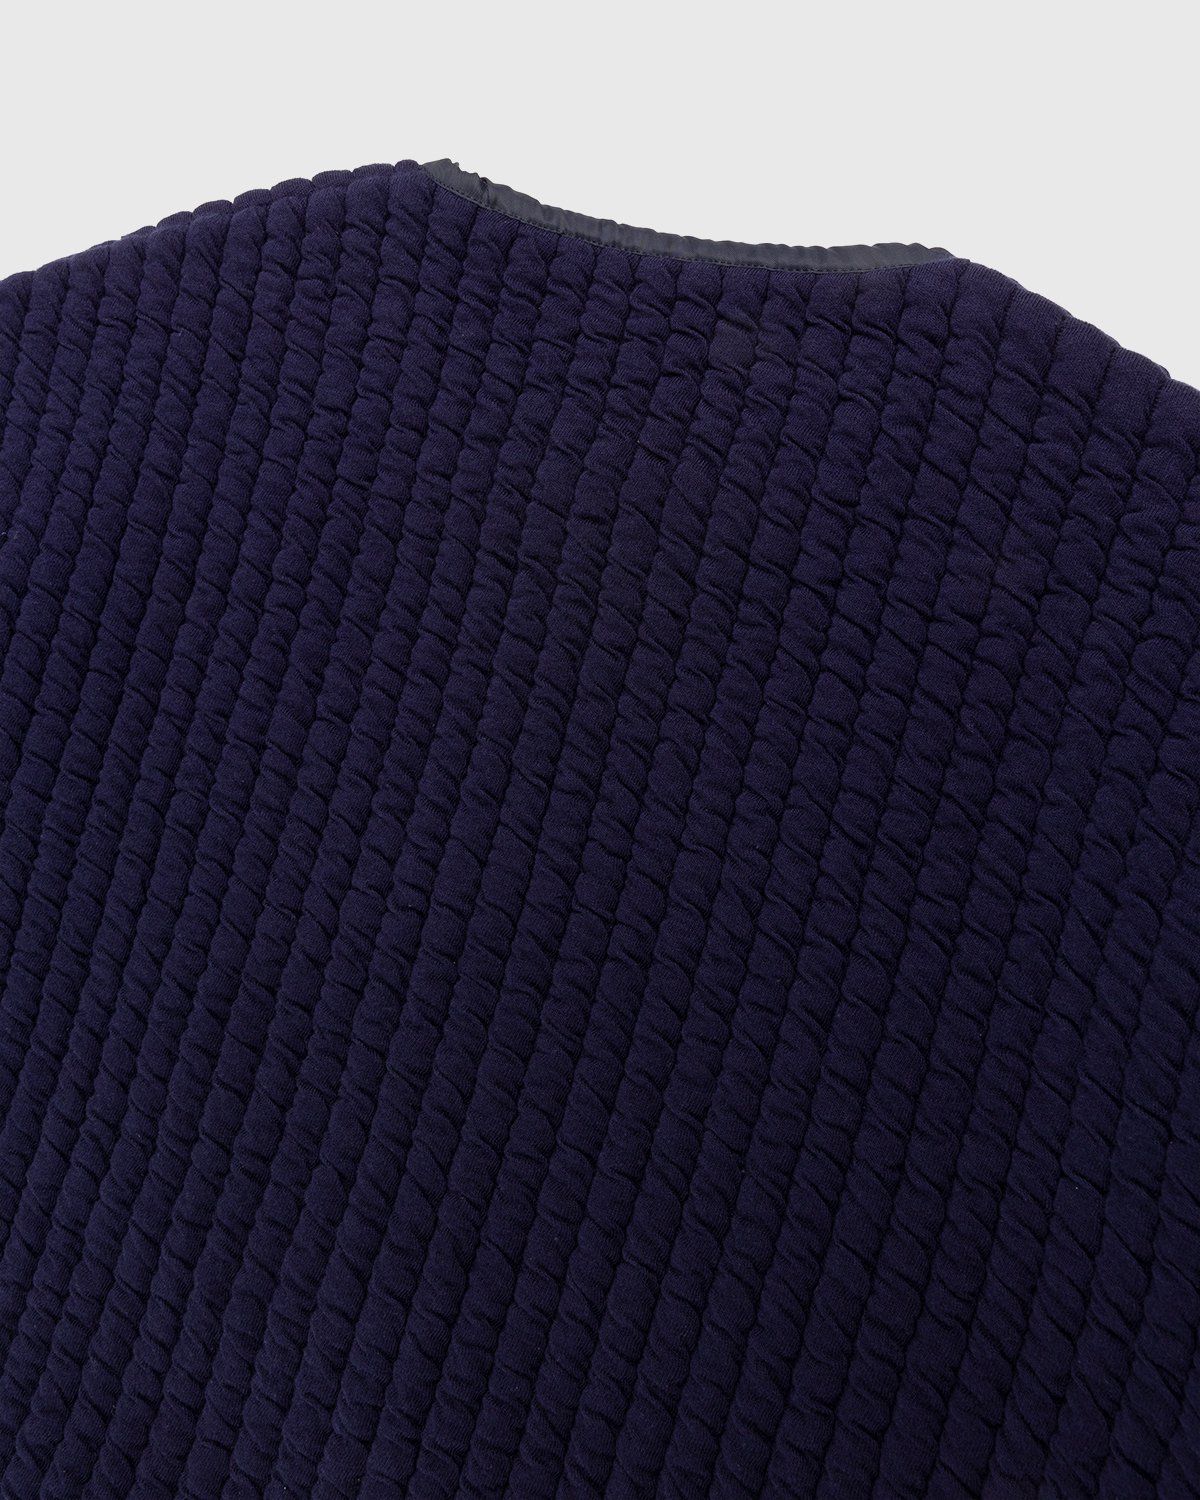 Jil Sander – Knitted Bomber Navy - Outerwear - Blue - Image 3